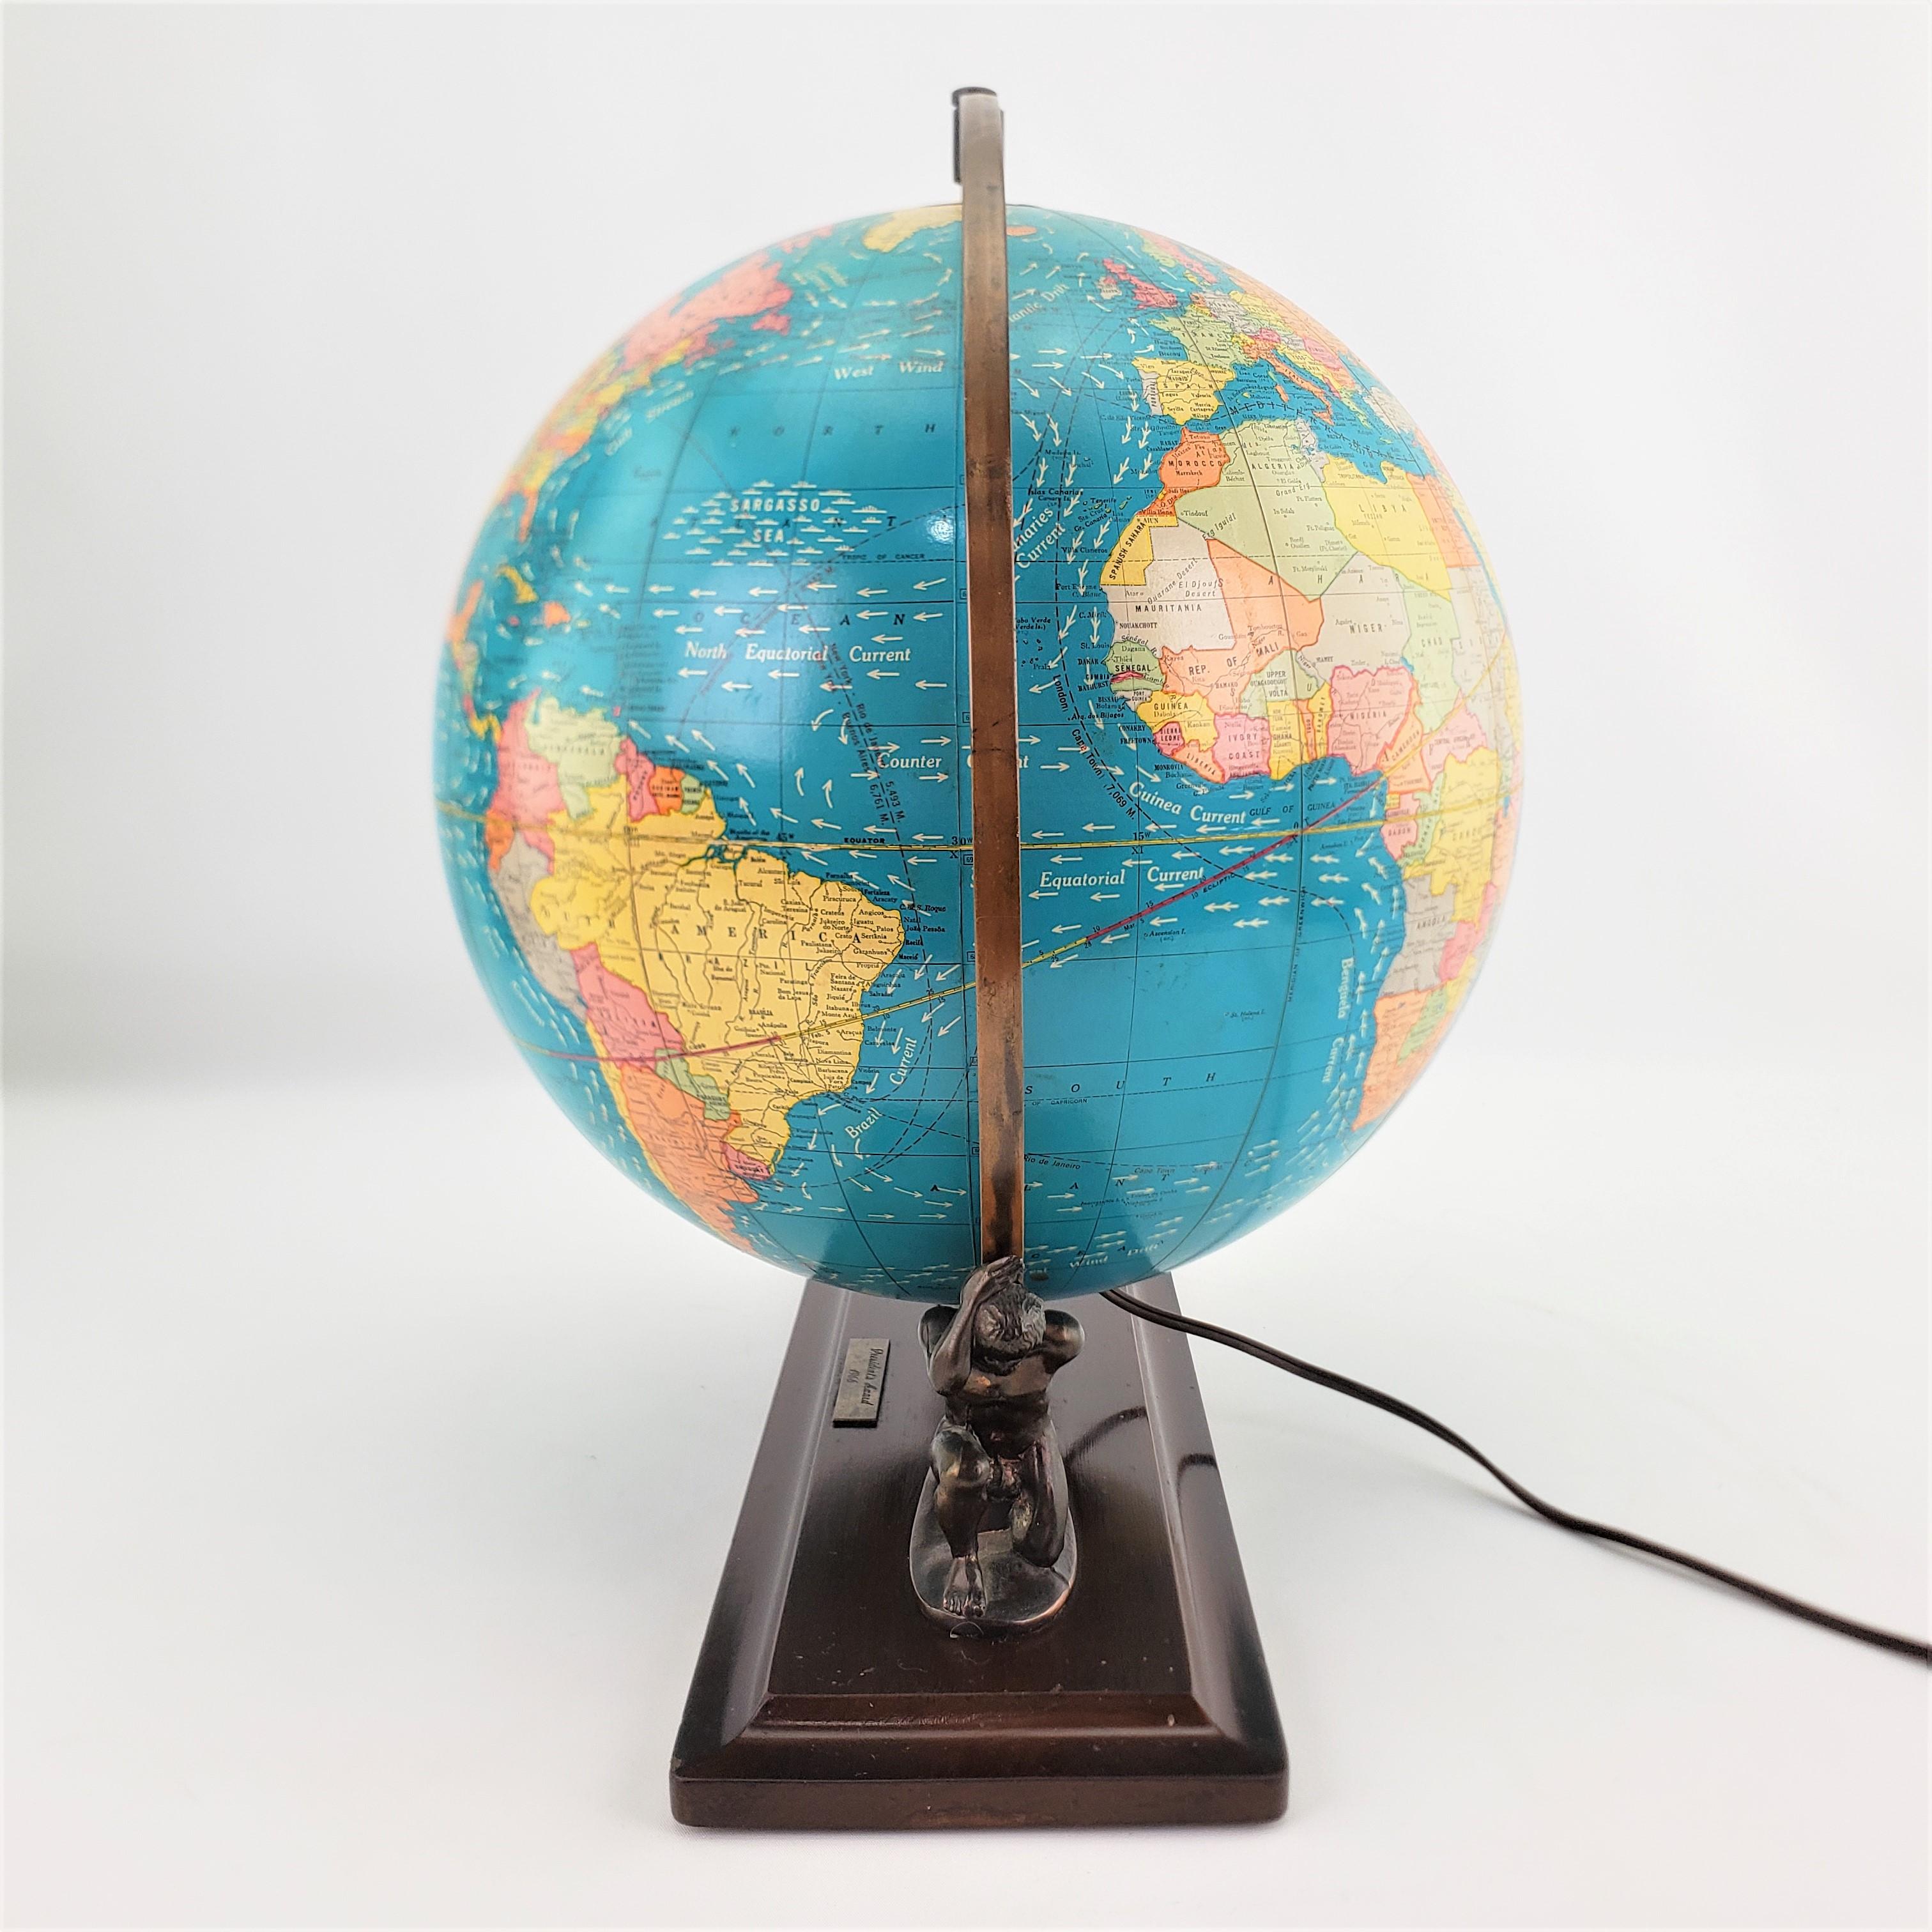 Cast Vintage George F. Cram Co. Figural Brass Atlas Illuminated Terrestrial Globe